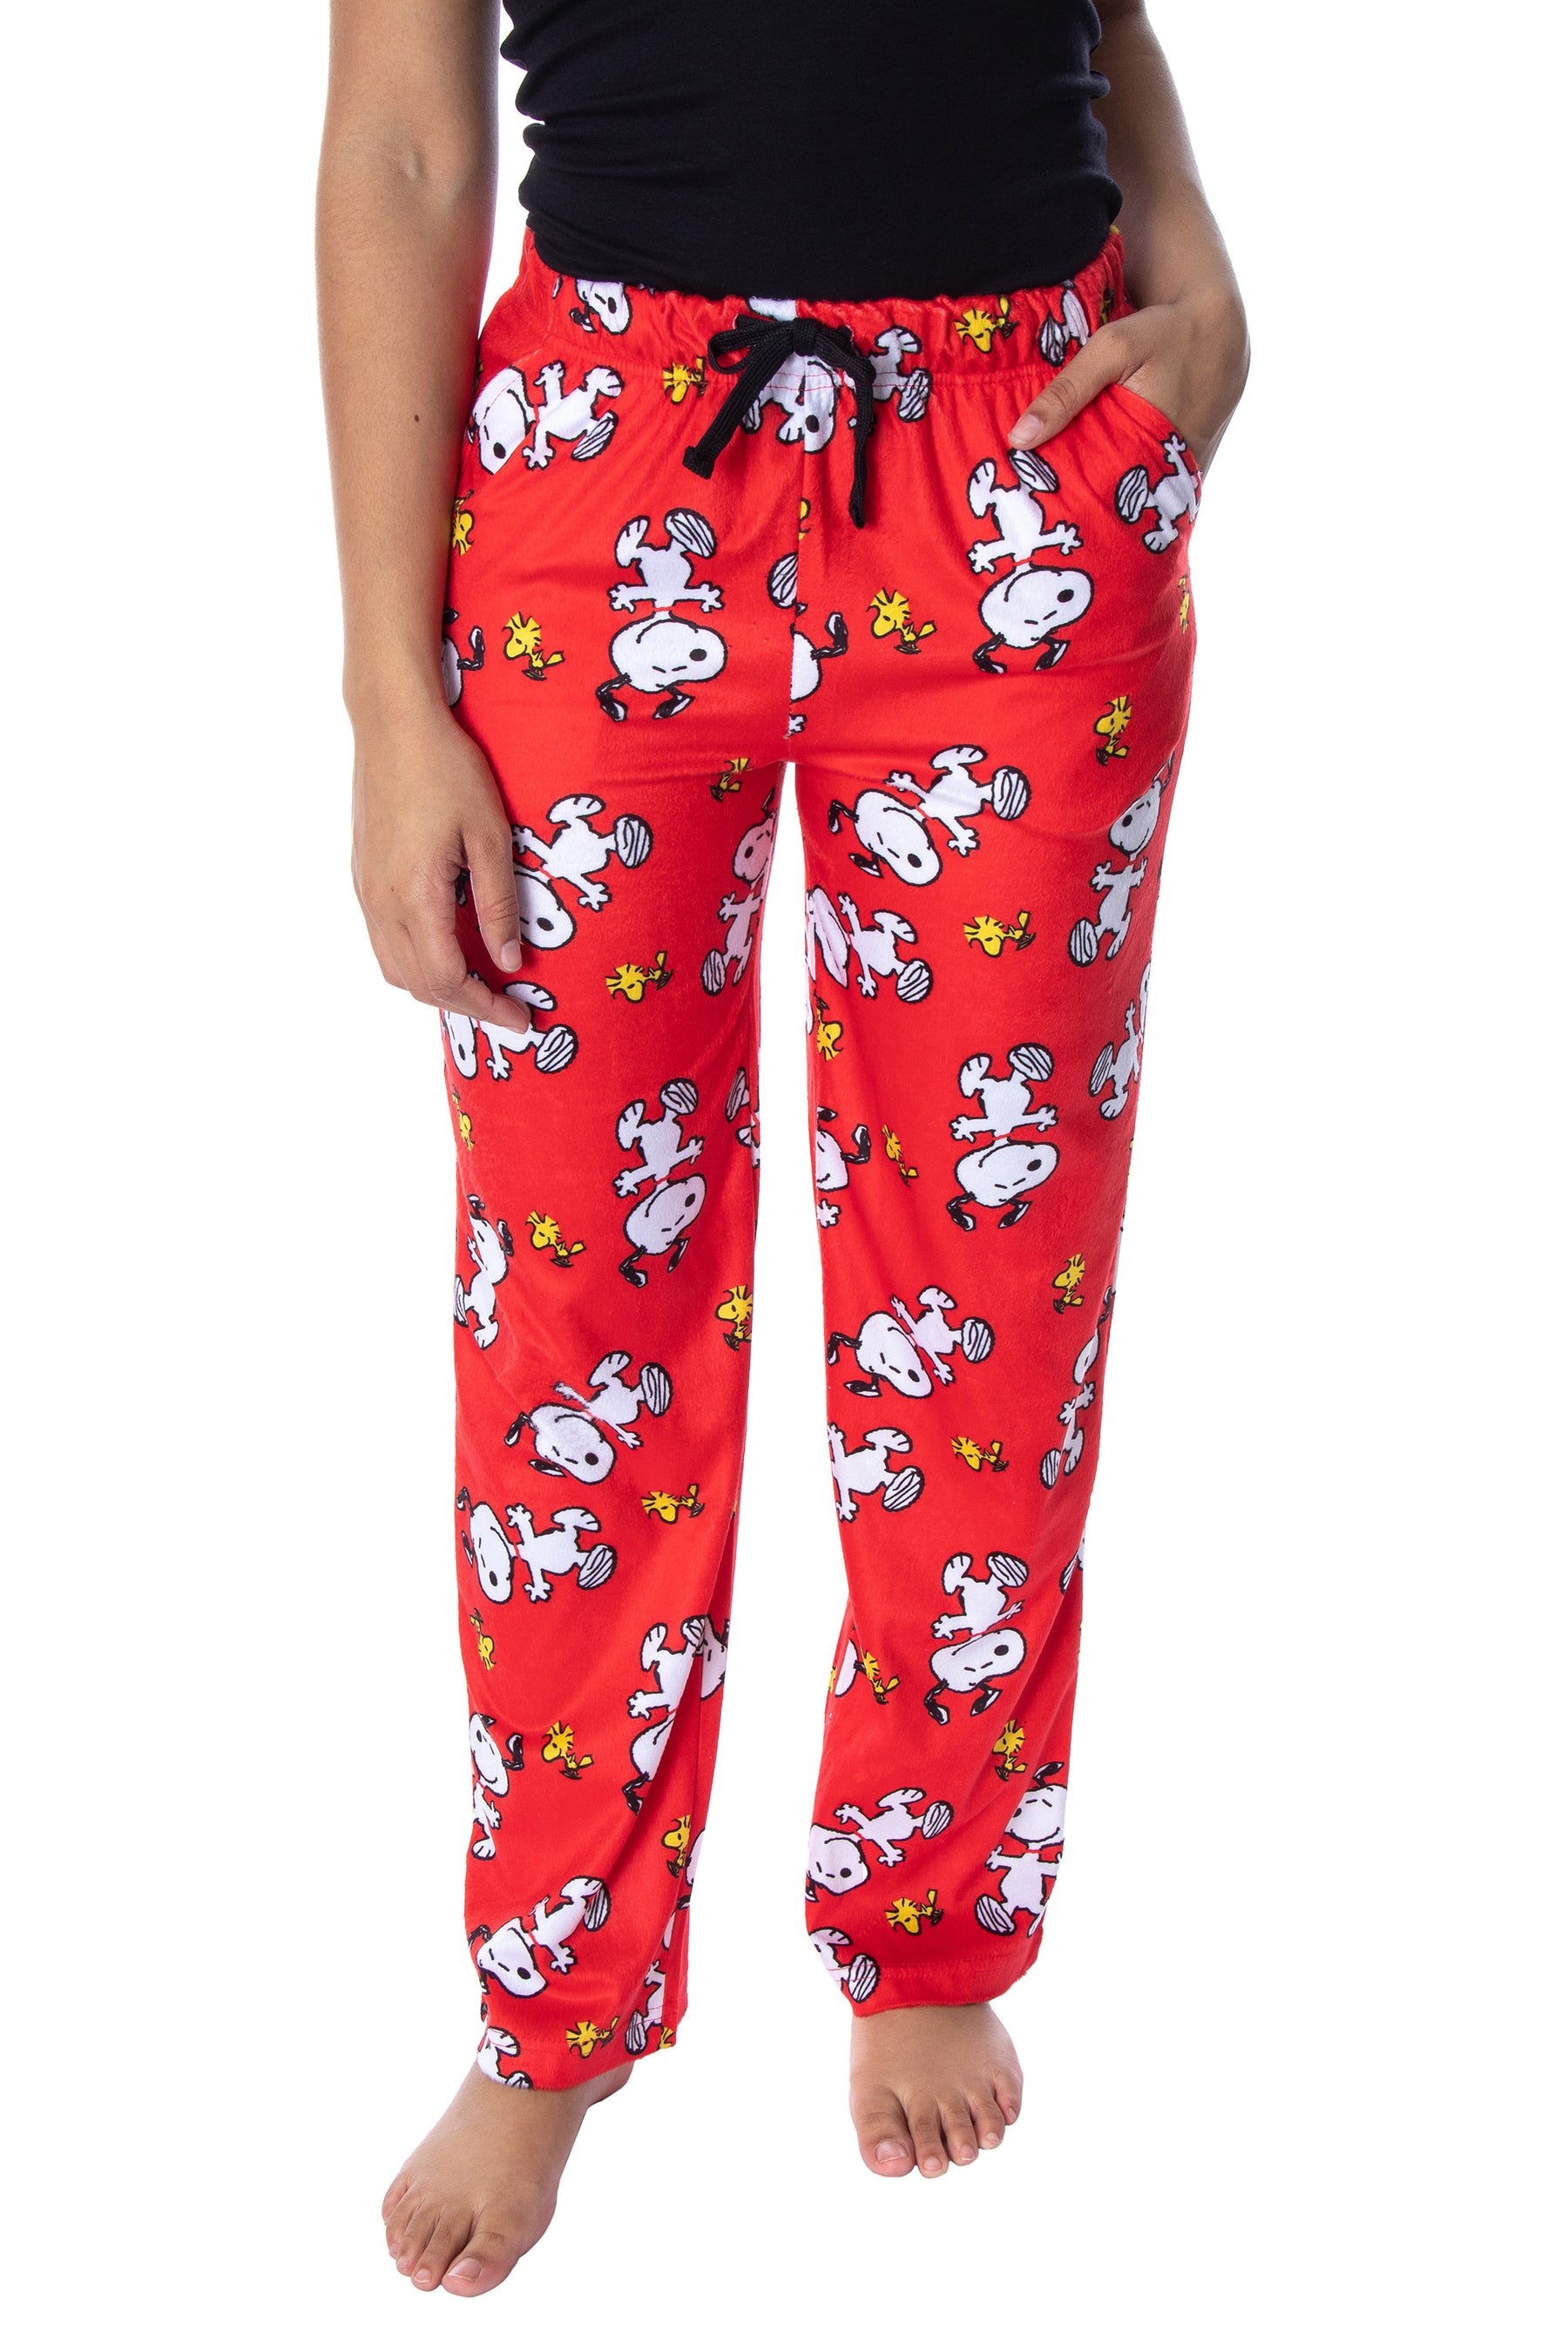 Peanuts Women's Pajama Pants 